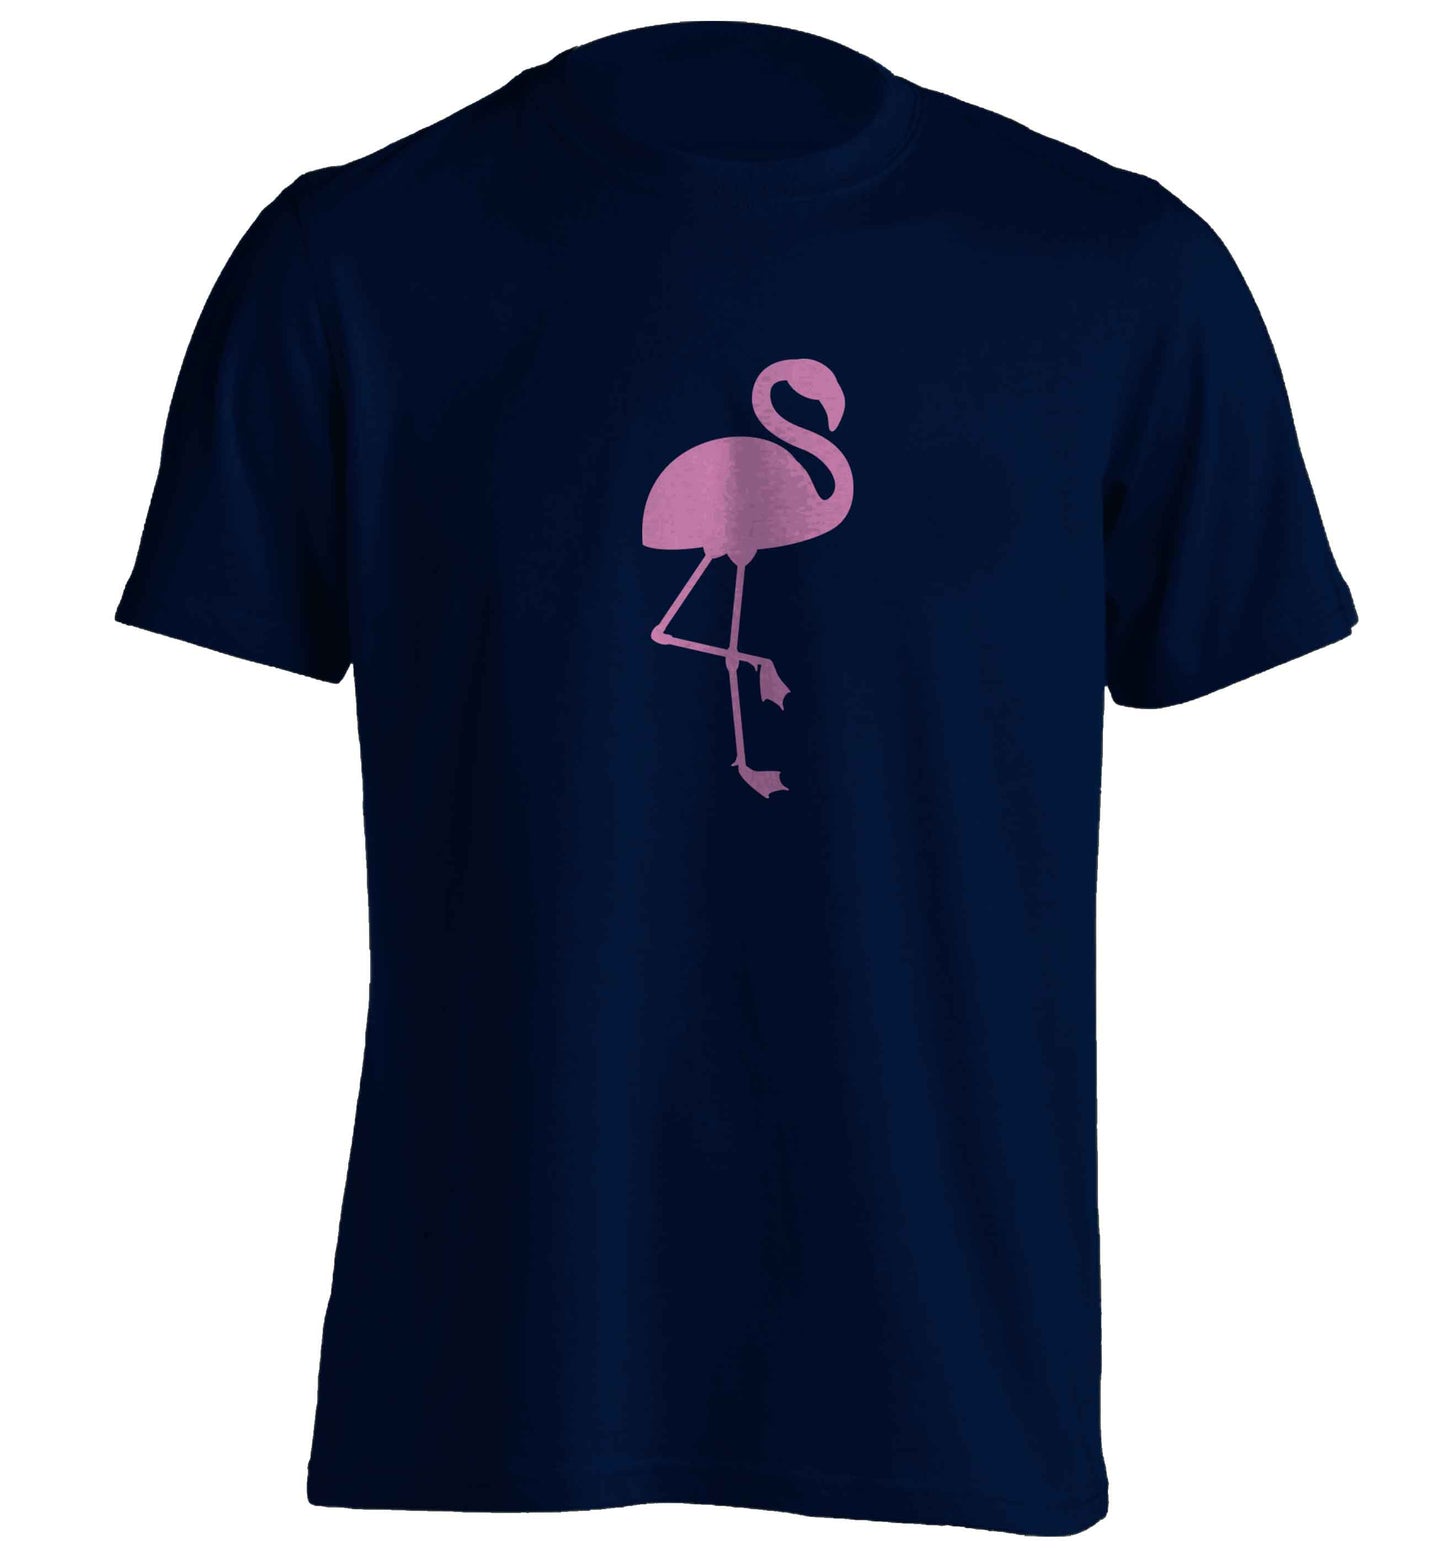 Pink flamingo adults unisex navy Tshirt 2XL